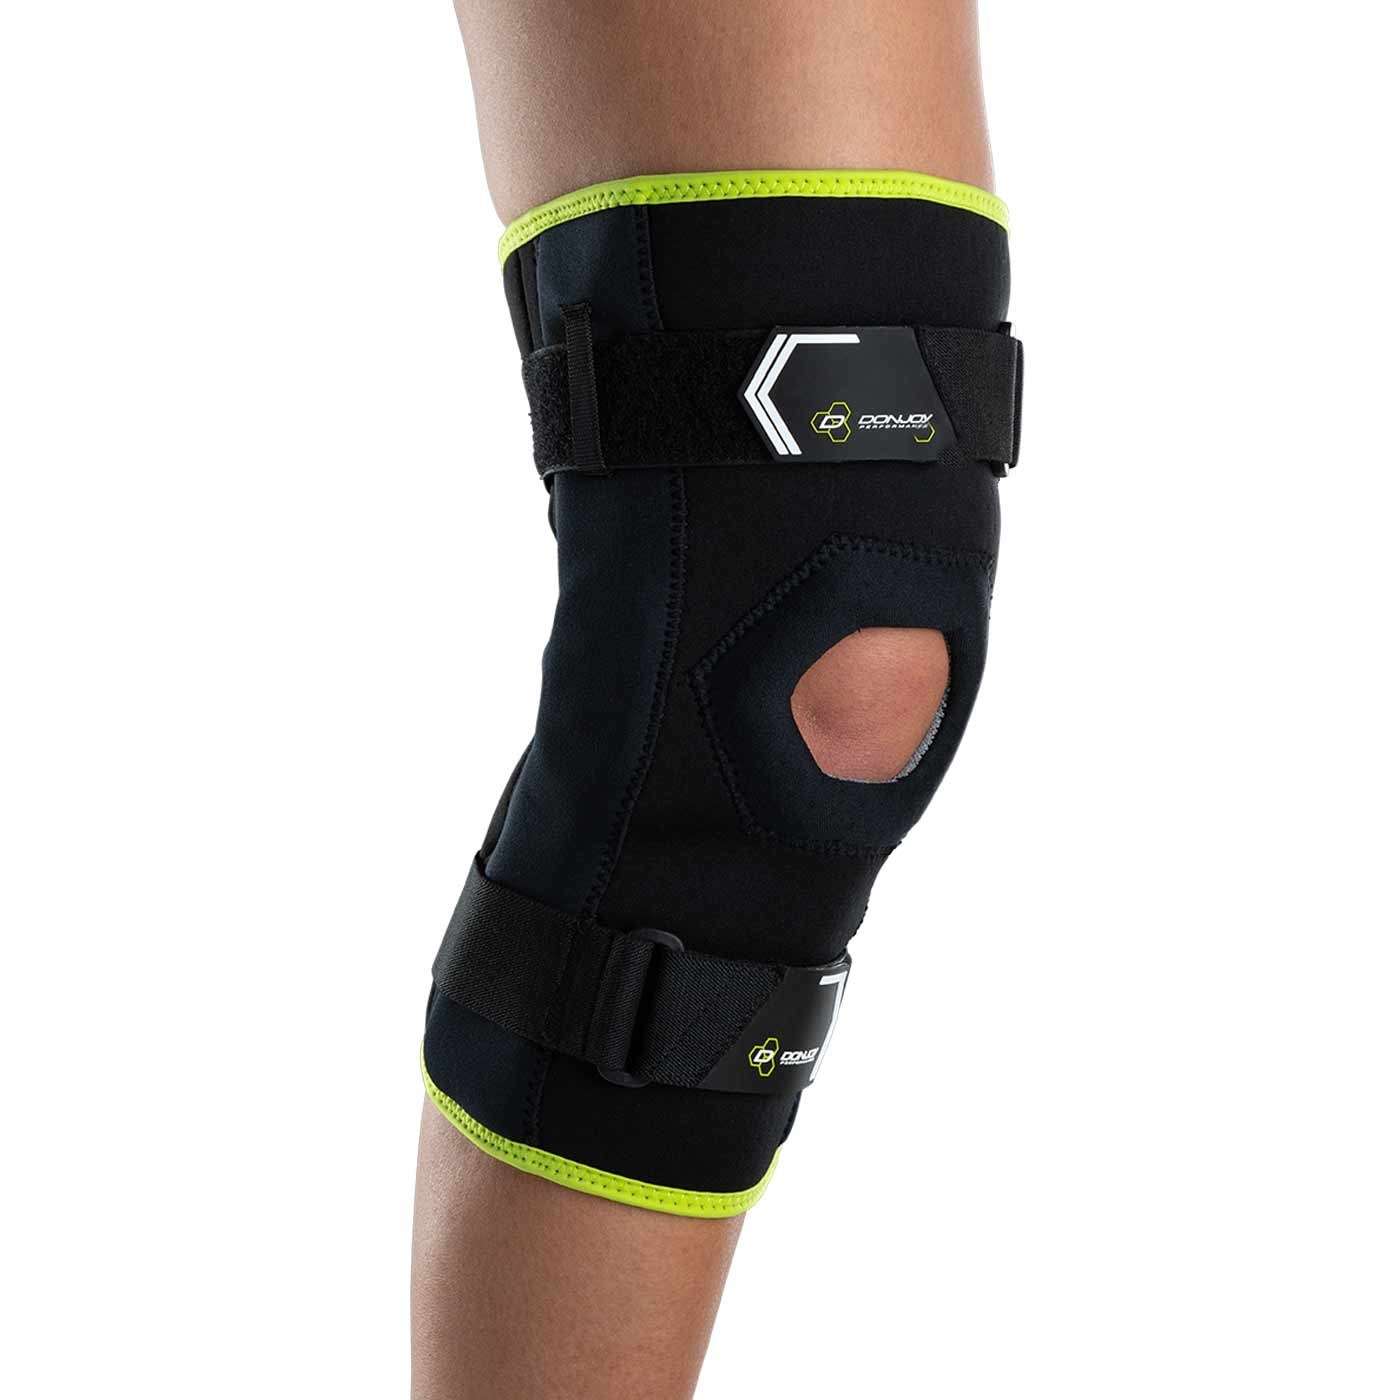 DonJoy Performance Bionic Comfort Hinged Wraparound Knee Brace